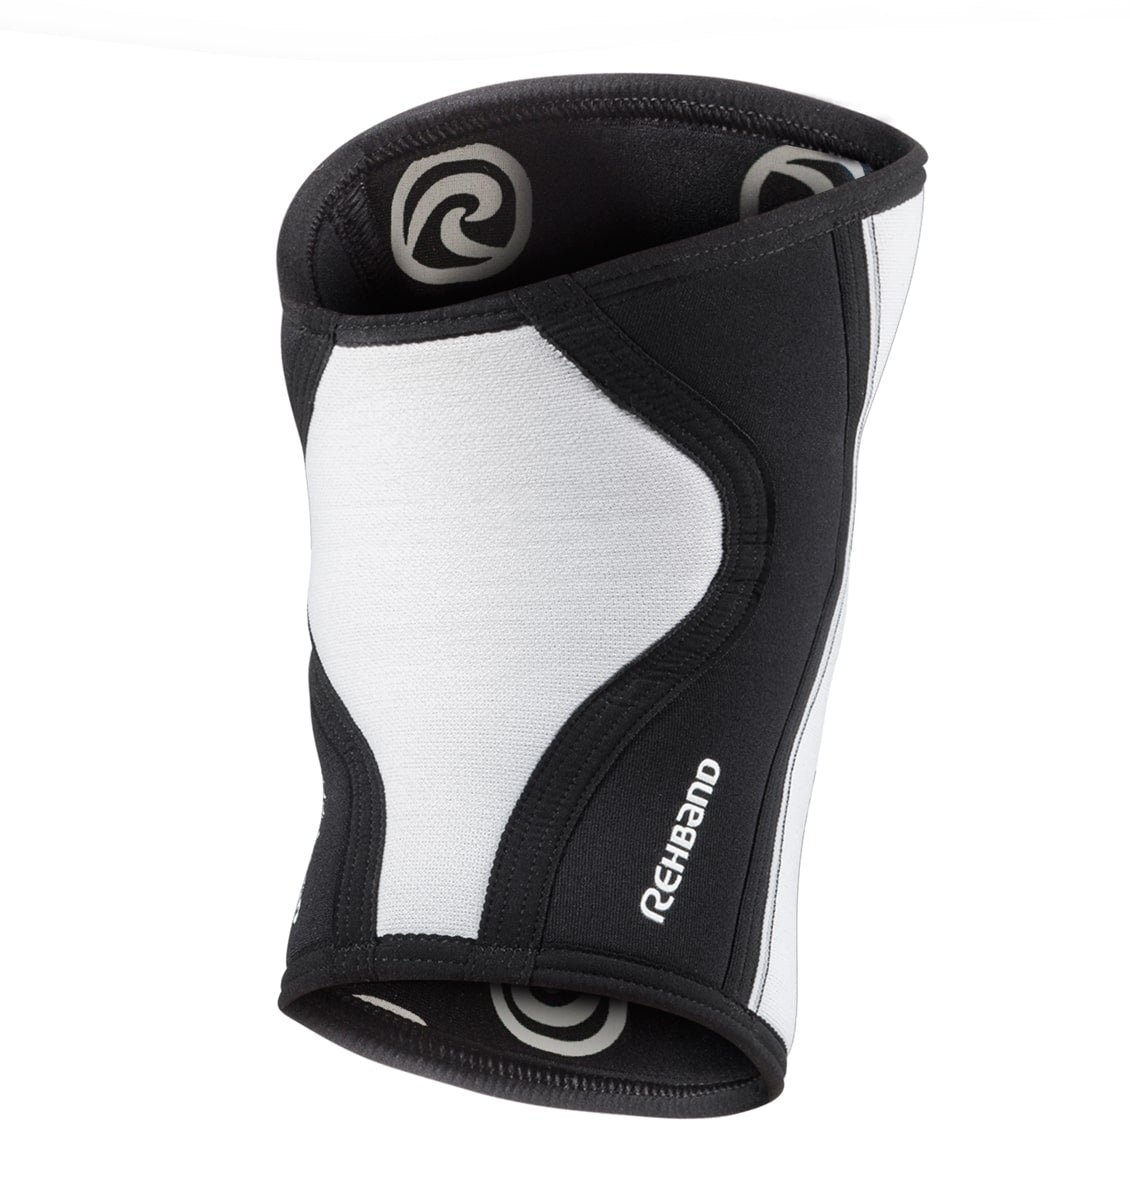 105301-01 - Rehband Rx Knee Sleeve - White/Black - 5mm - Back